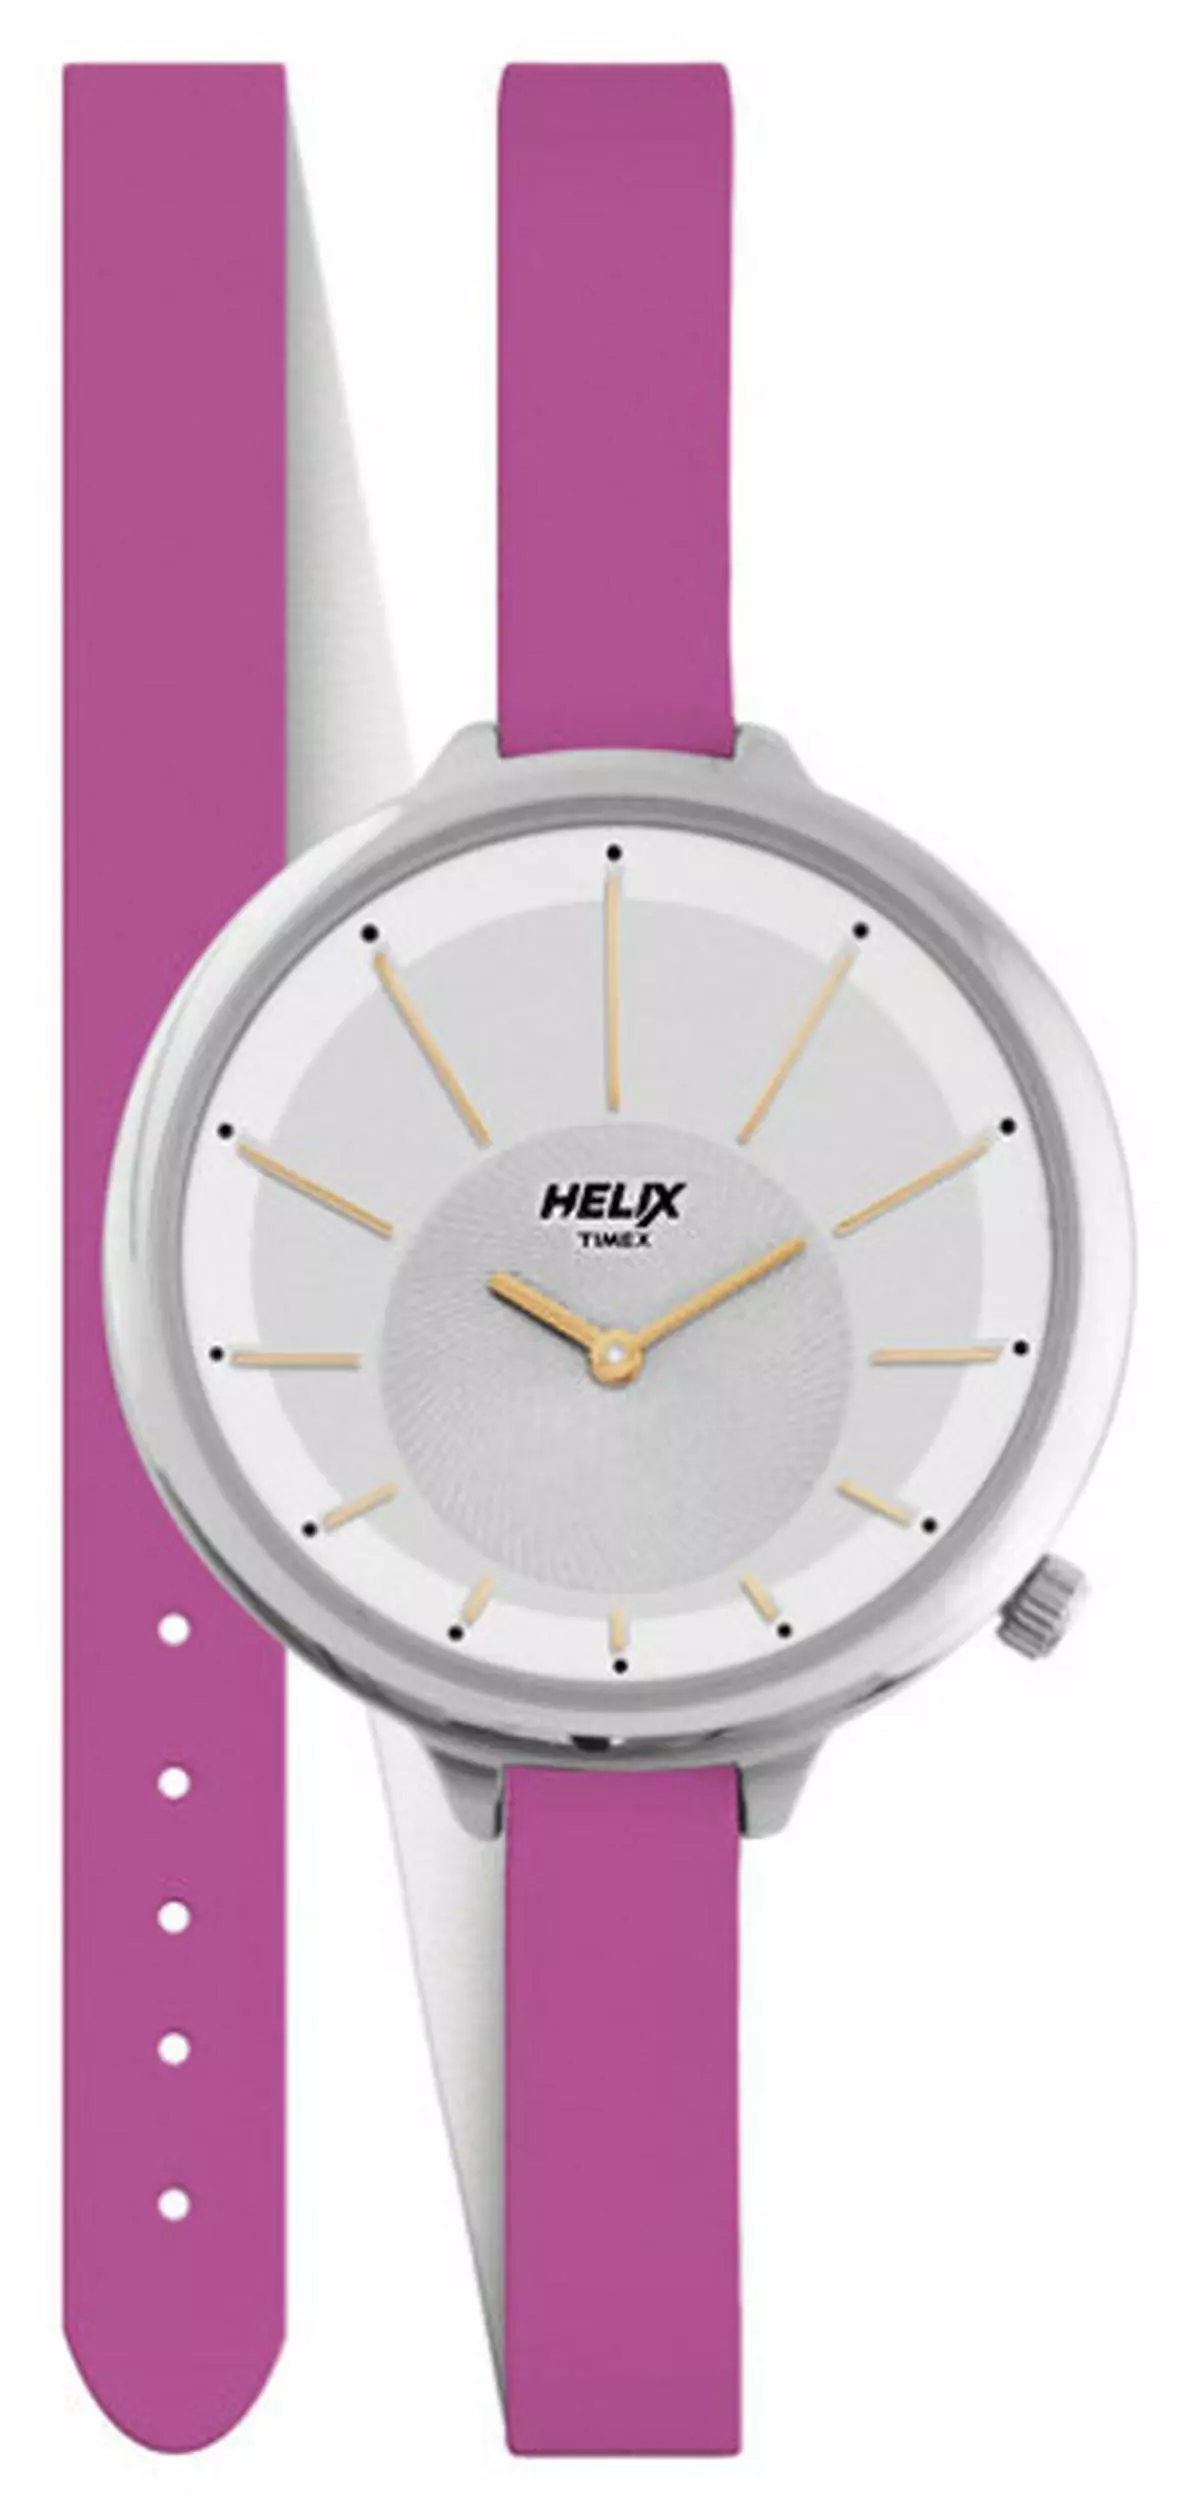 Timex Helix Twisted Watch